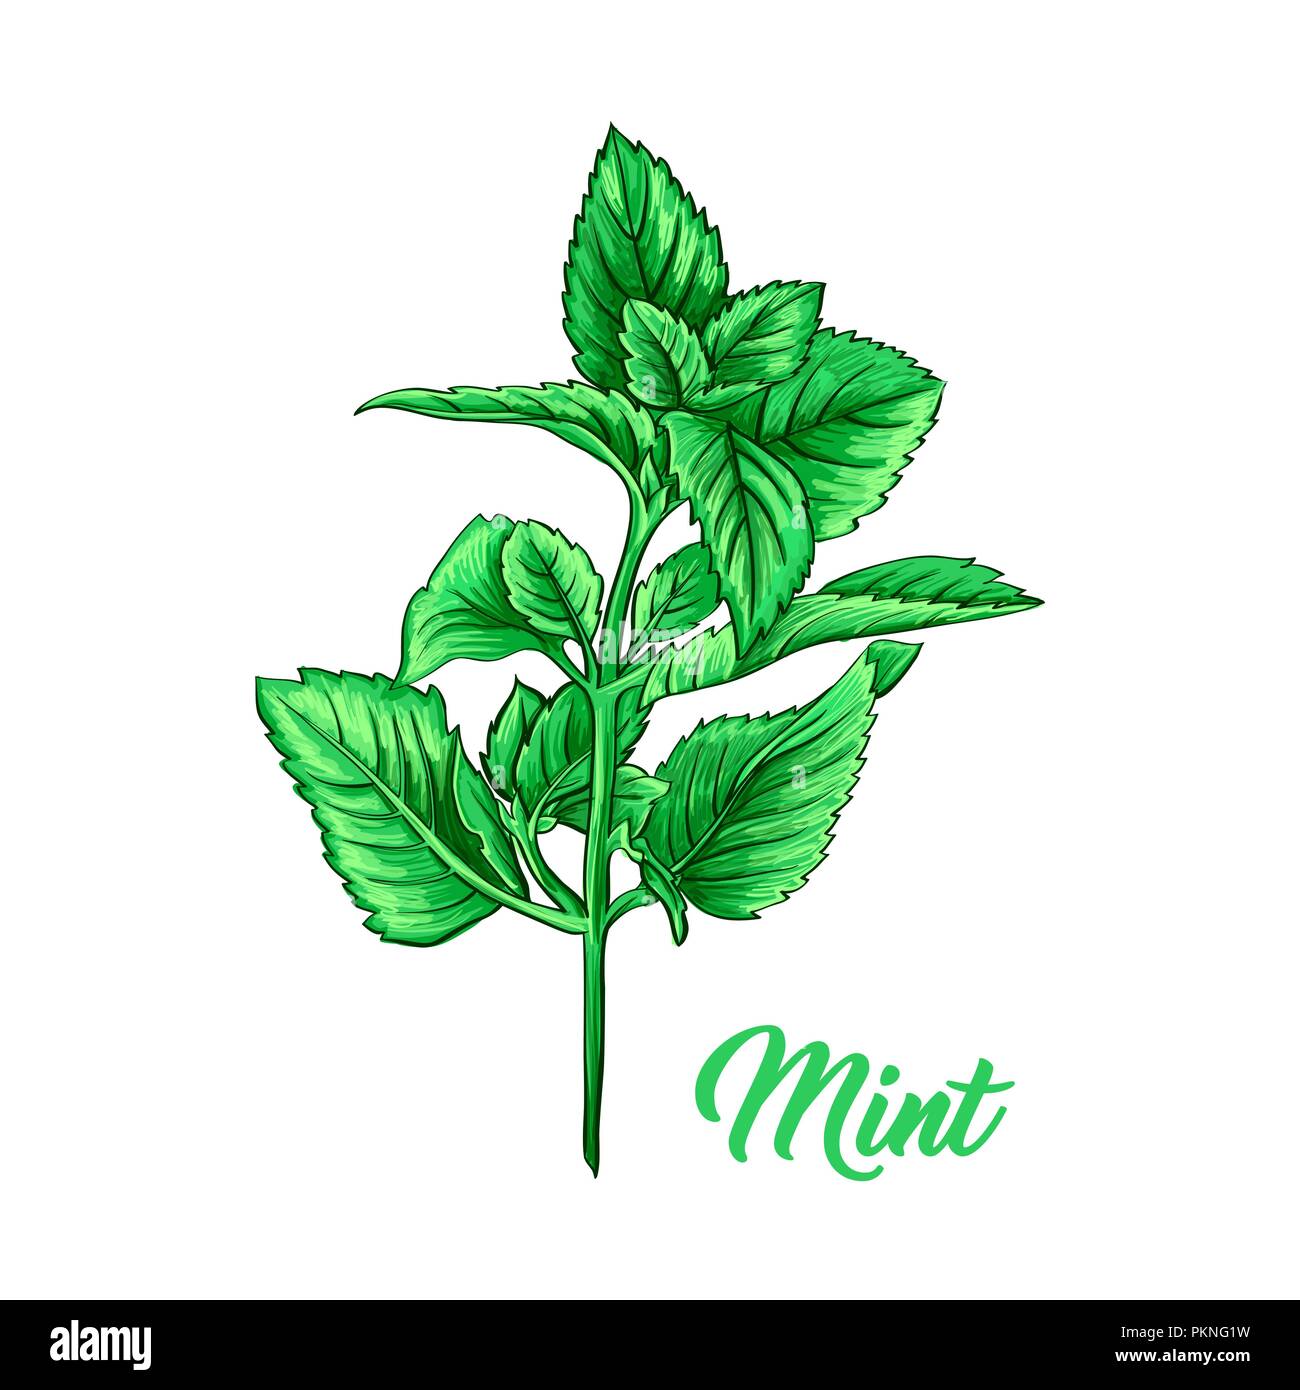 mint plant clipart free